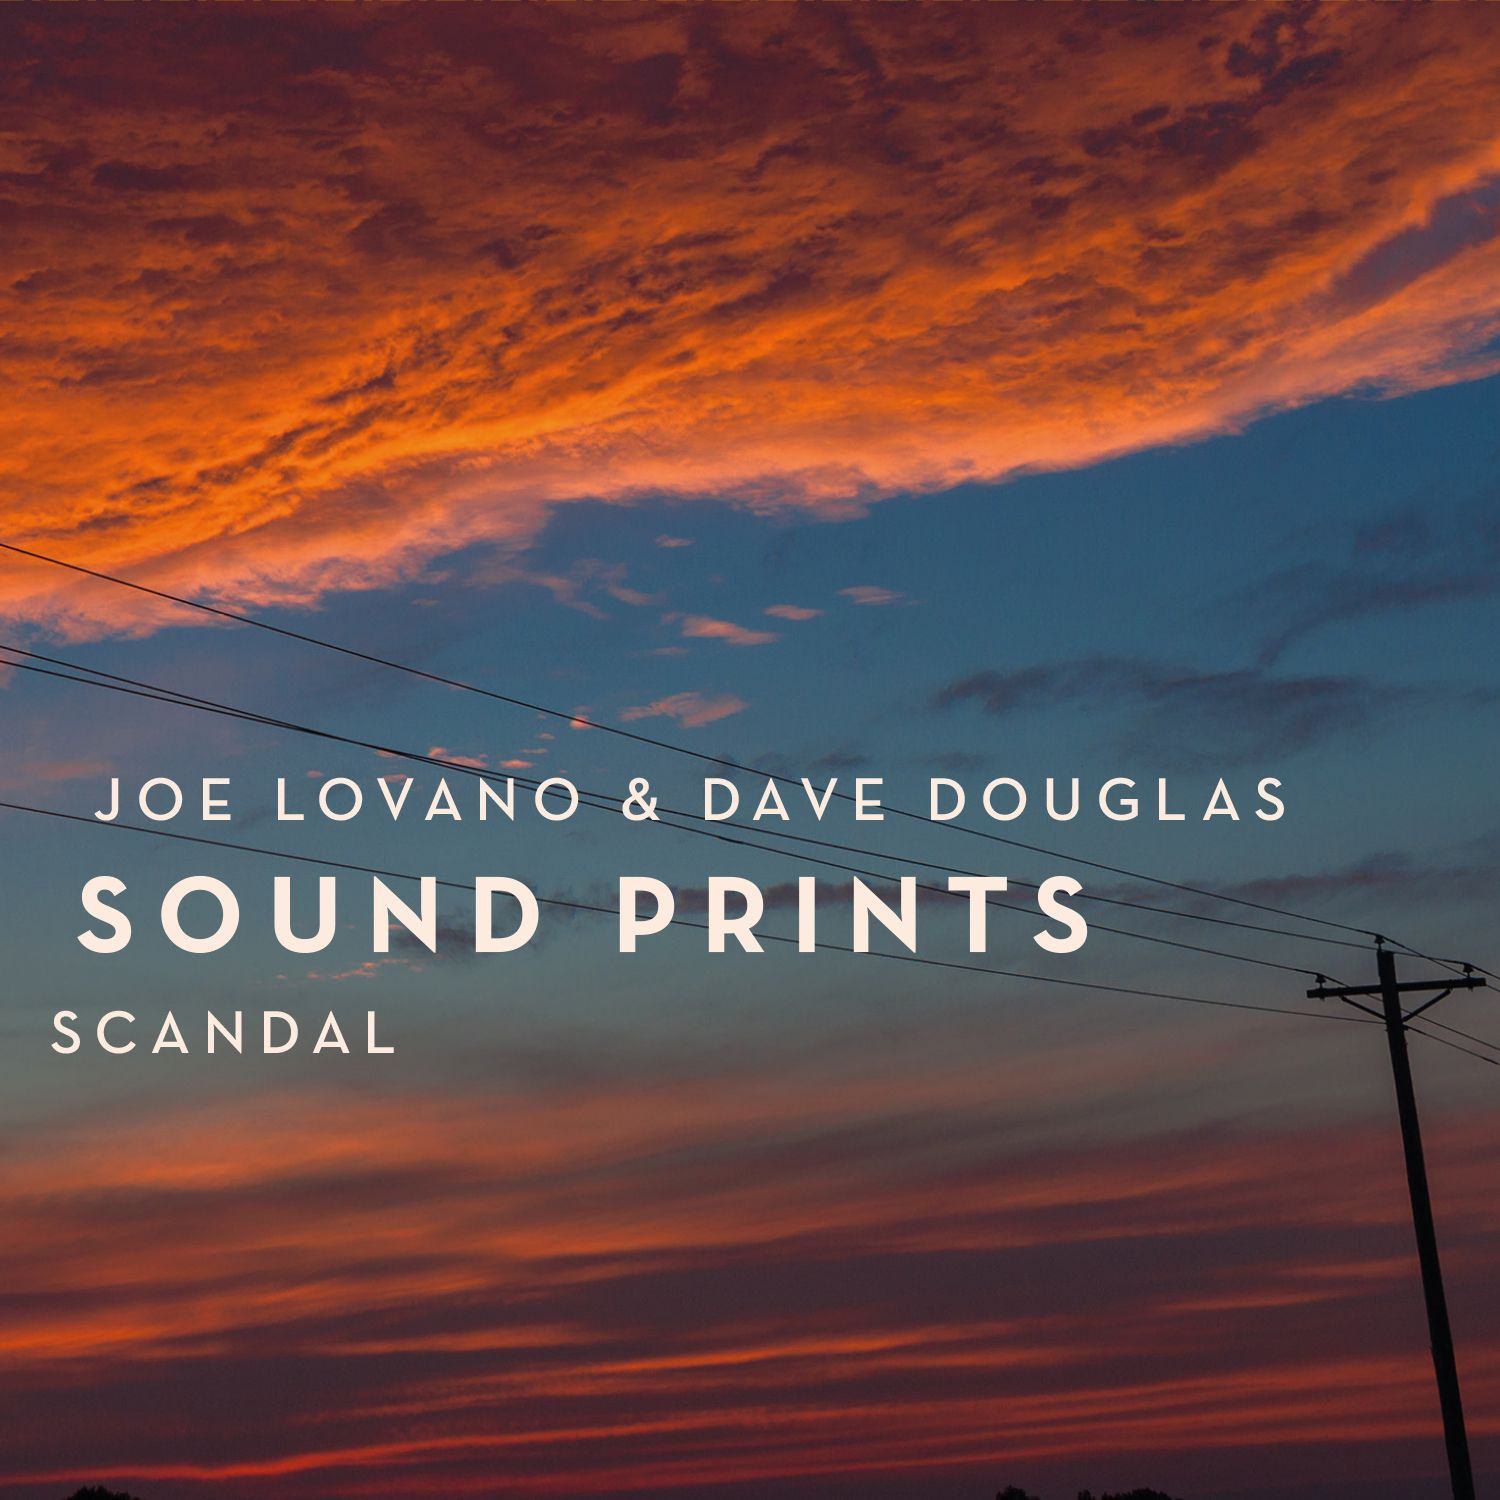 Joe Lovano and Dave Douglas Sound Prints - Scandal (2018) [HDTracks FLAC 24bit/44,1kHz]